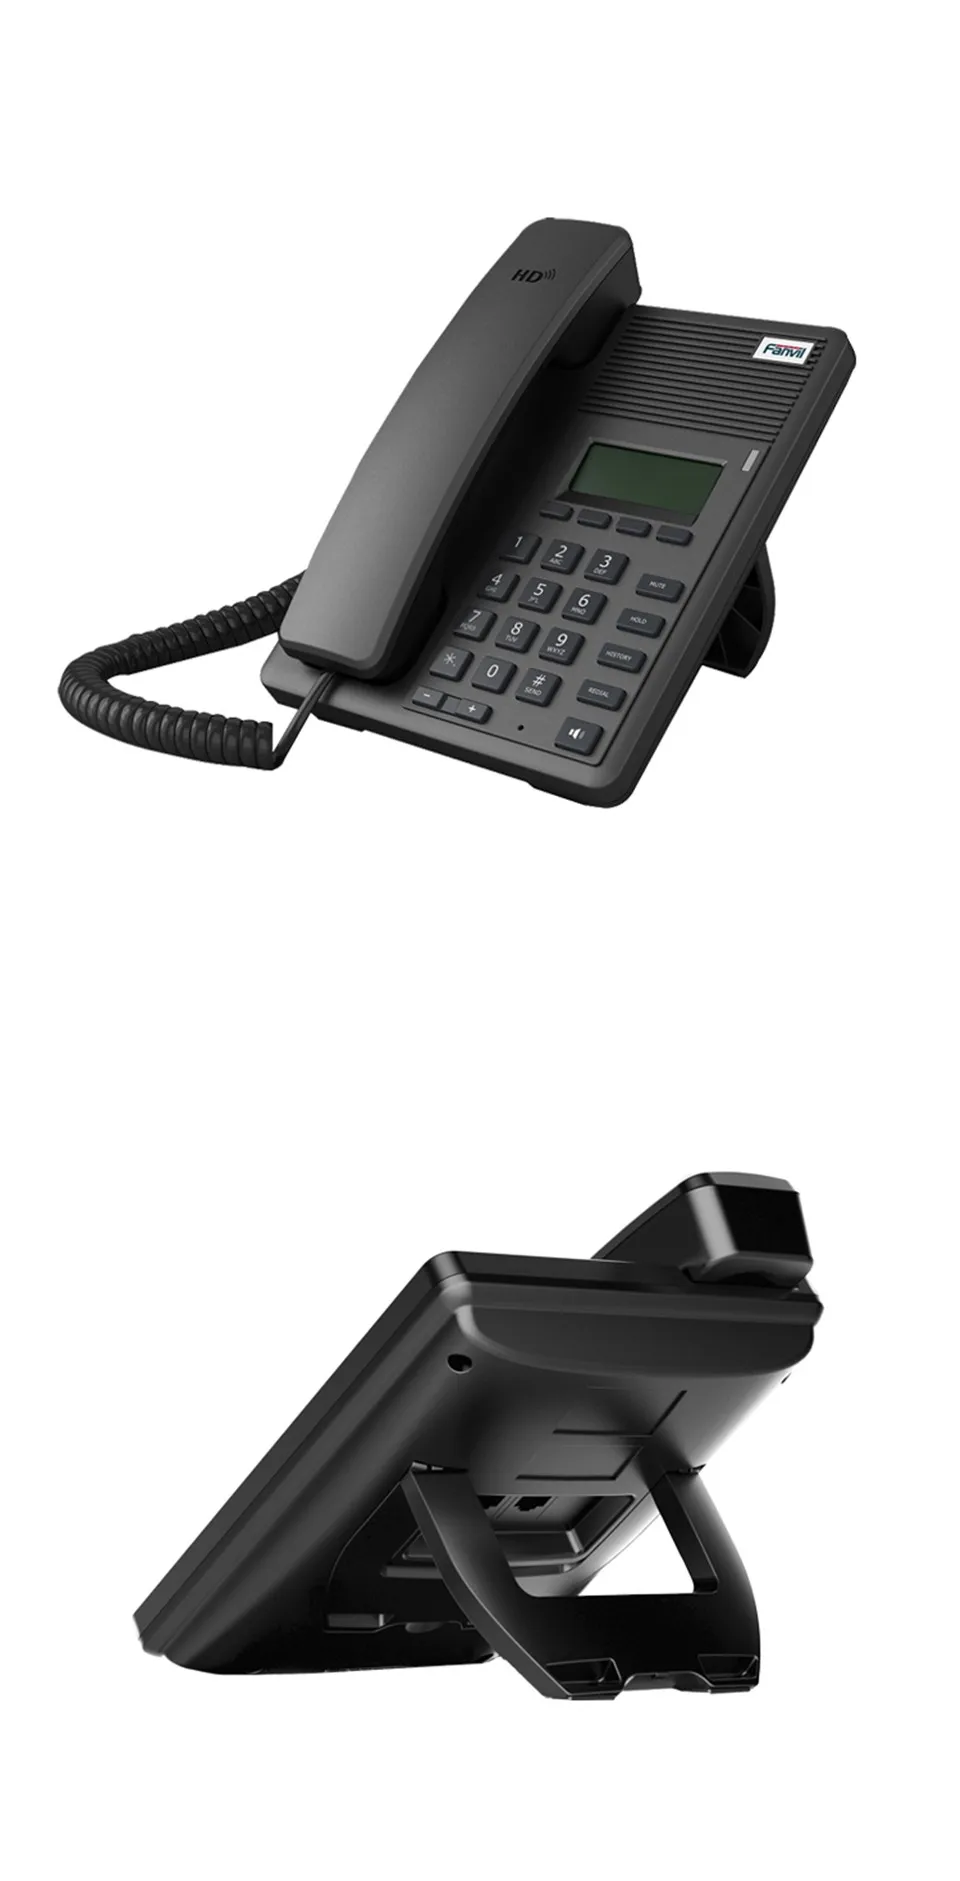 HTB1oaO2JVXXXXb4XFXXq6xXFXXXg Teléfono IP HD Voice 2 líneas SIP, teléfono VoIP. Asterisk Elastix mini slip Phone RJ09 interfaz de auriculares, soporte Multi idioma